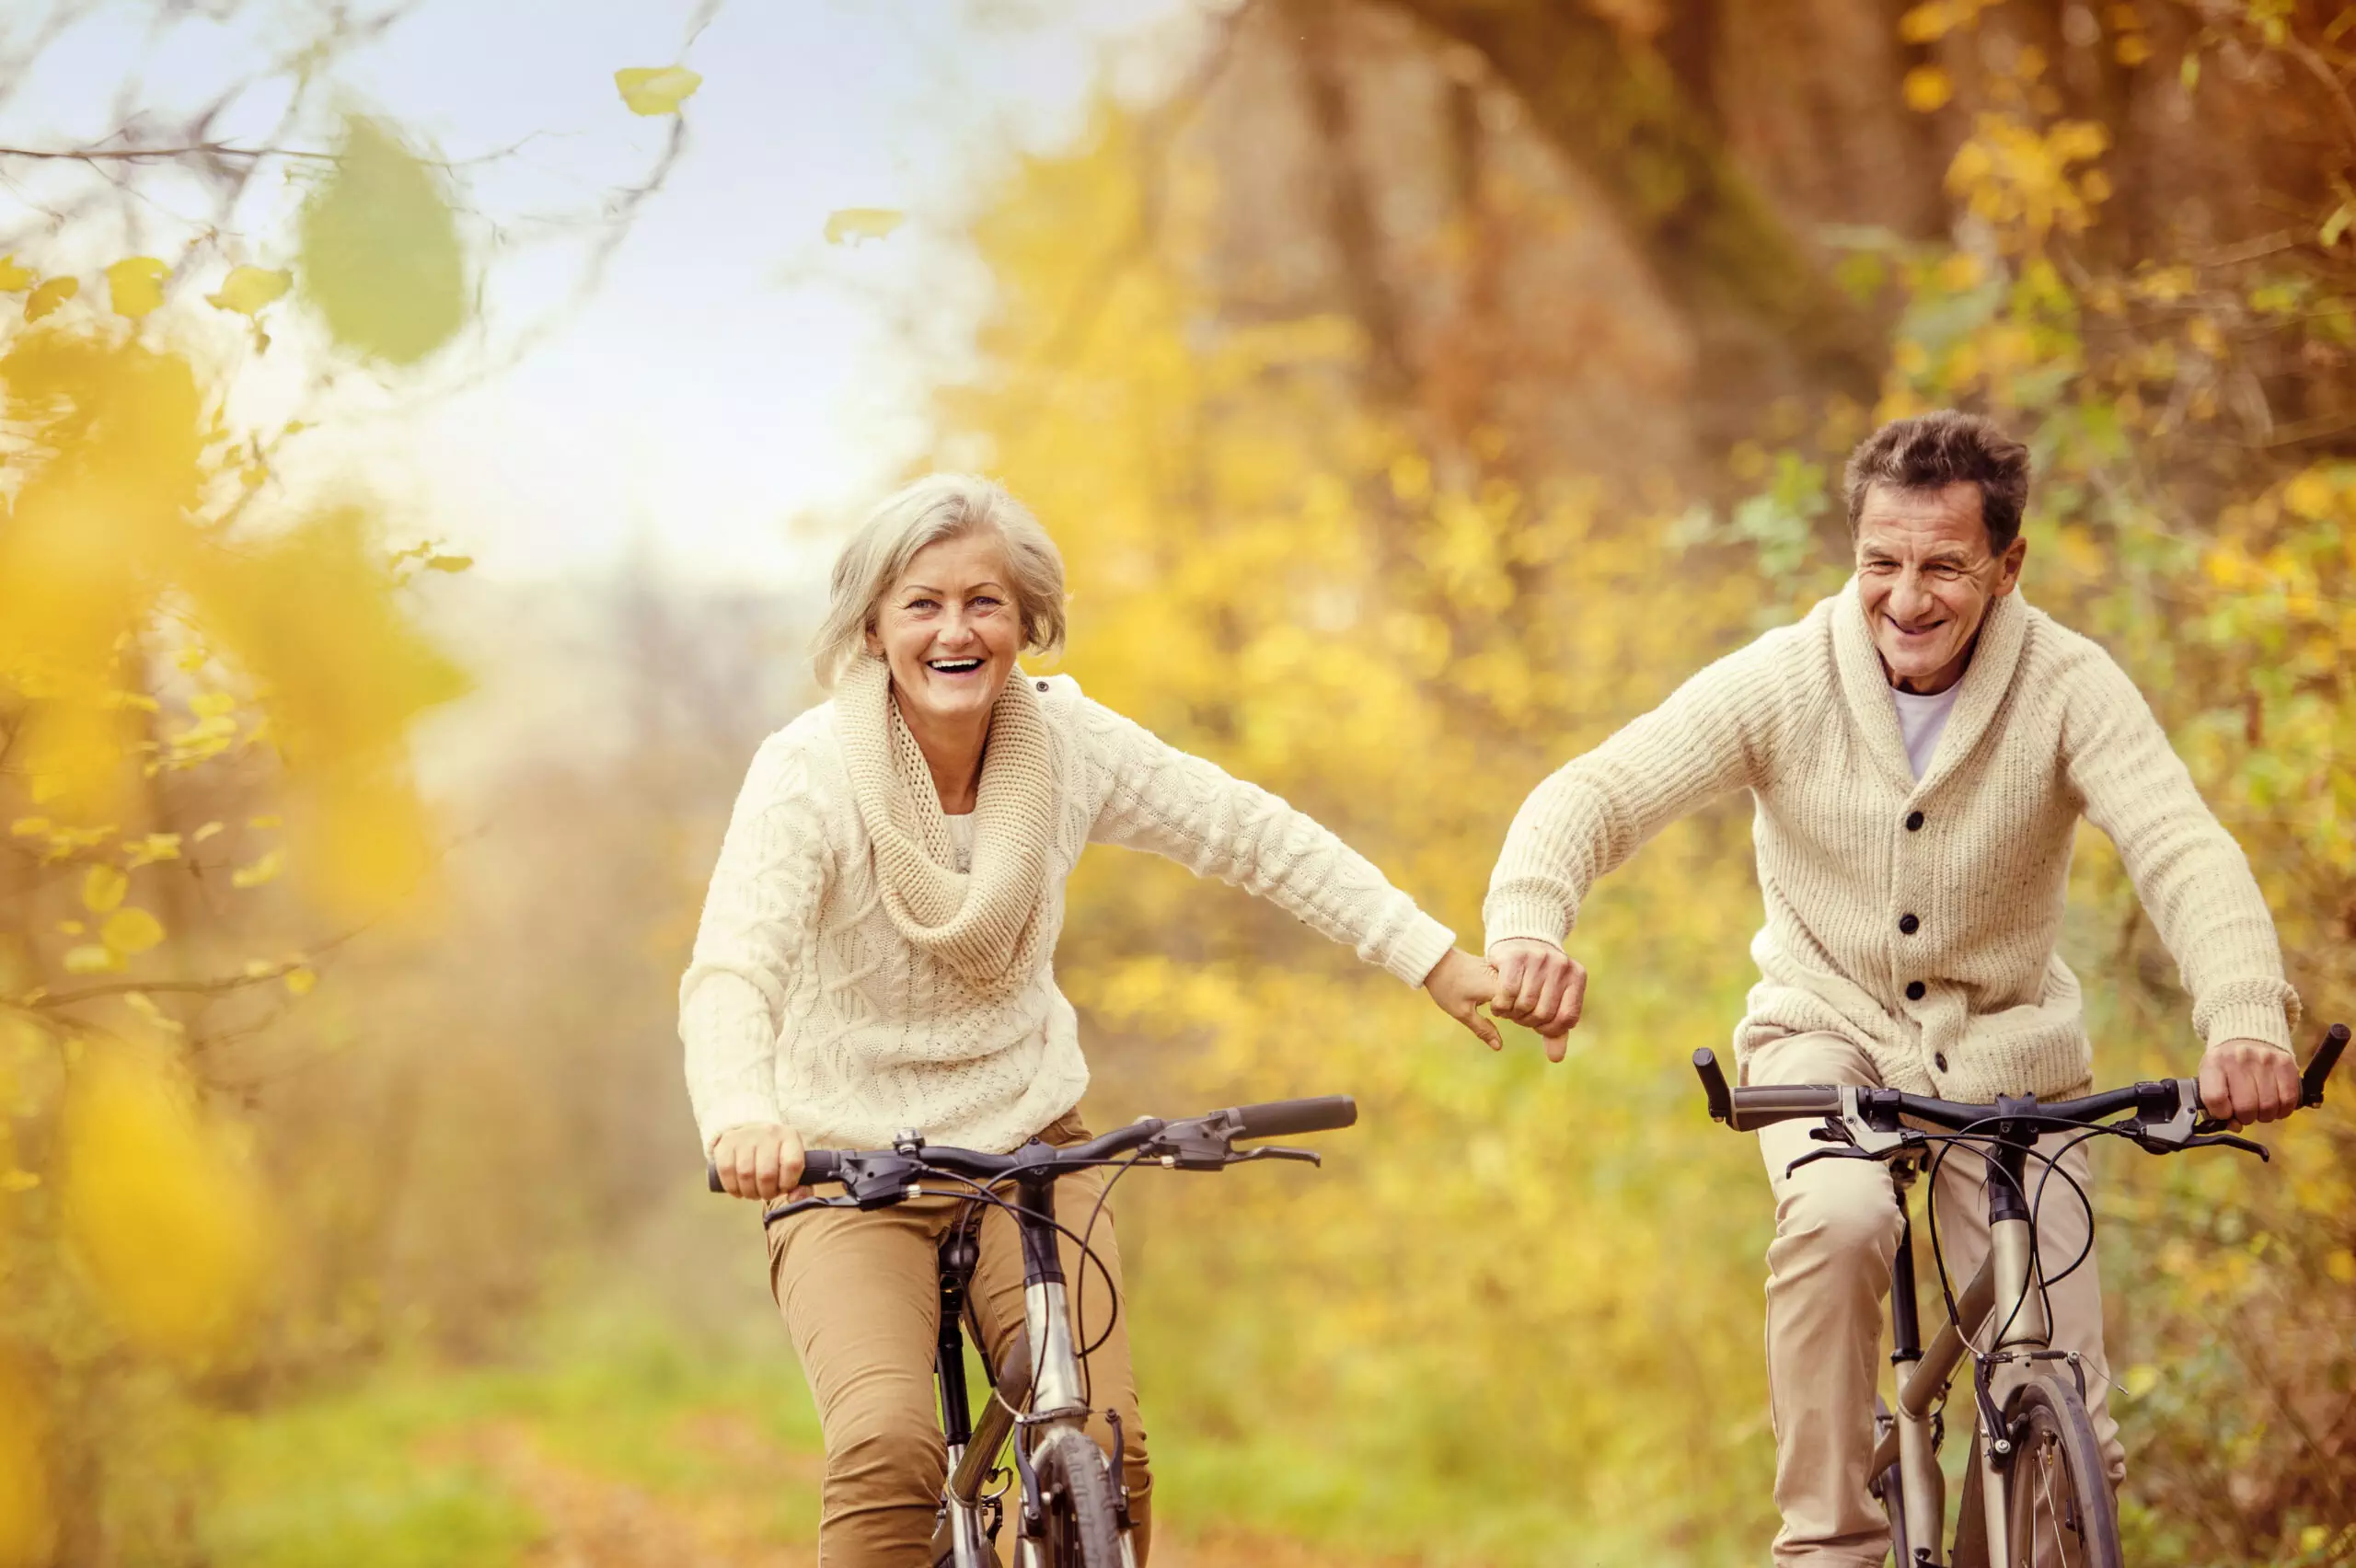 Couple riding bikes in autumn scenery.